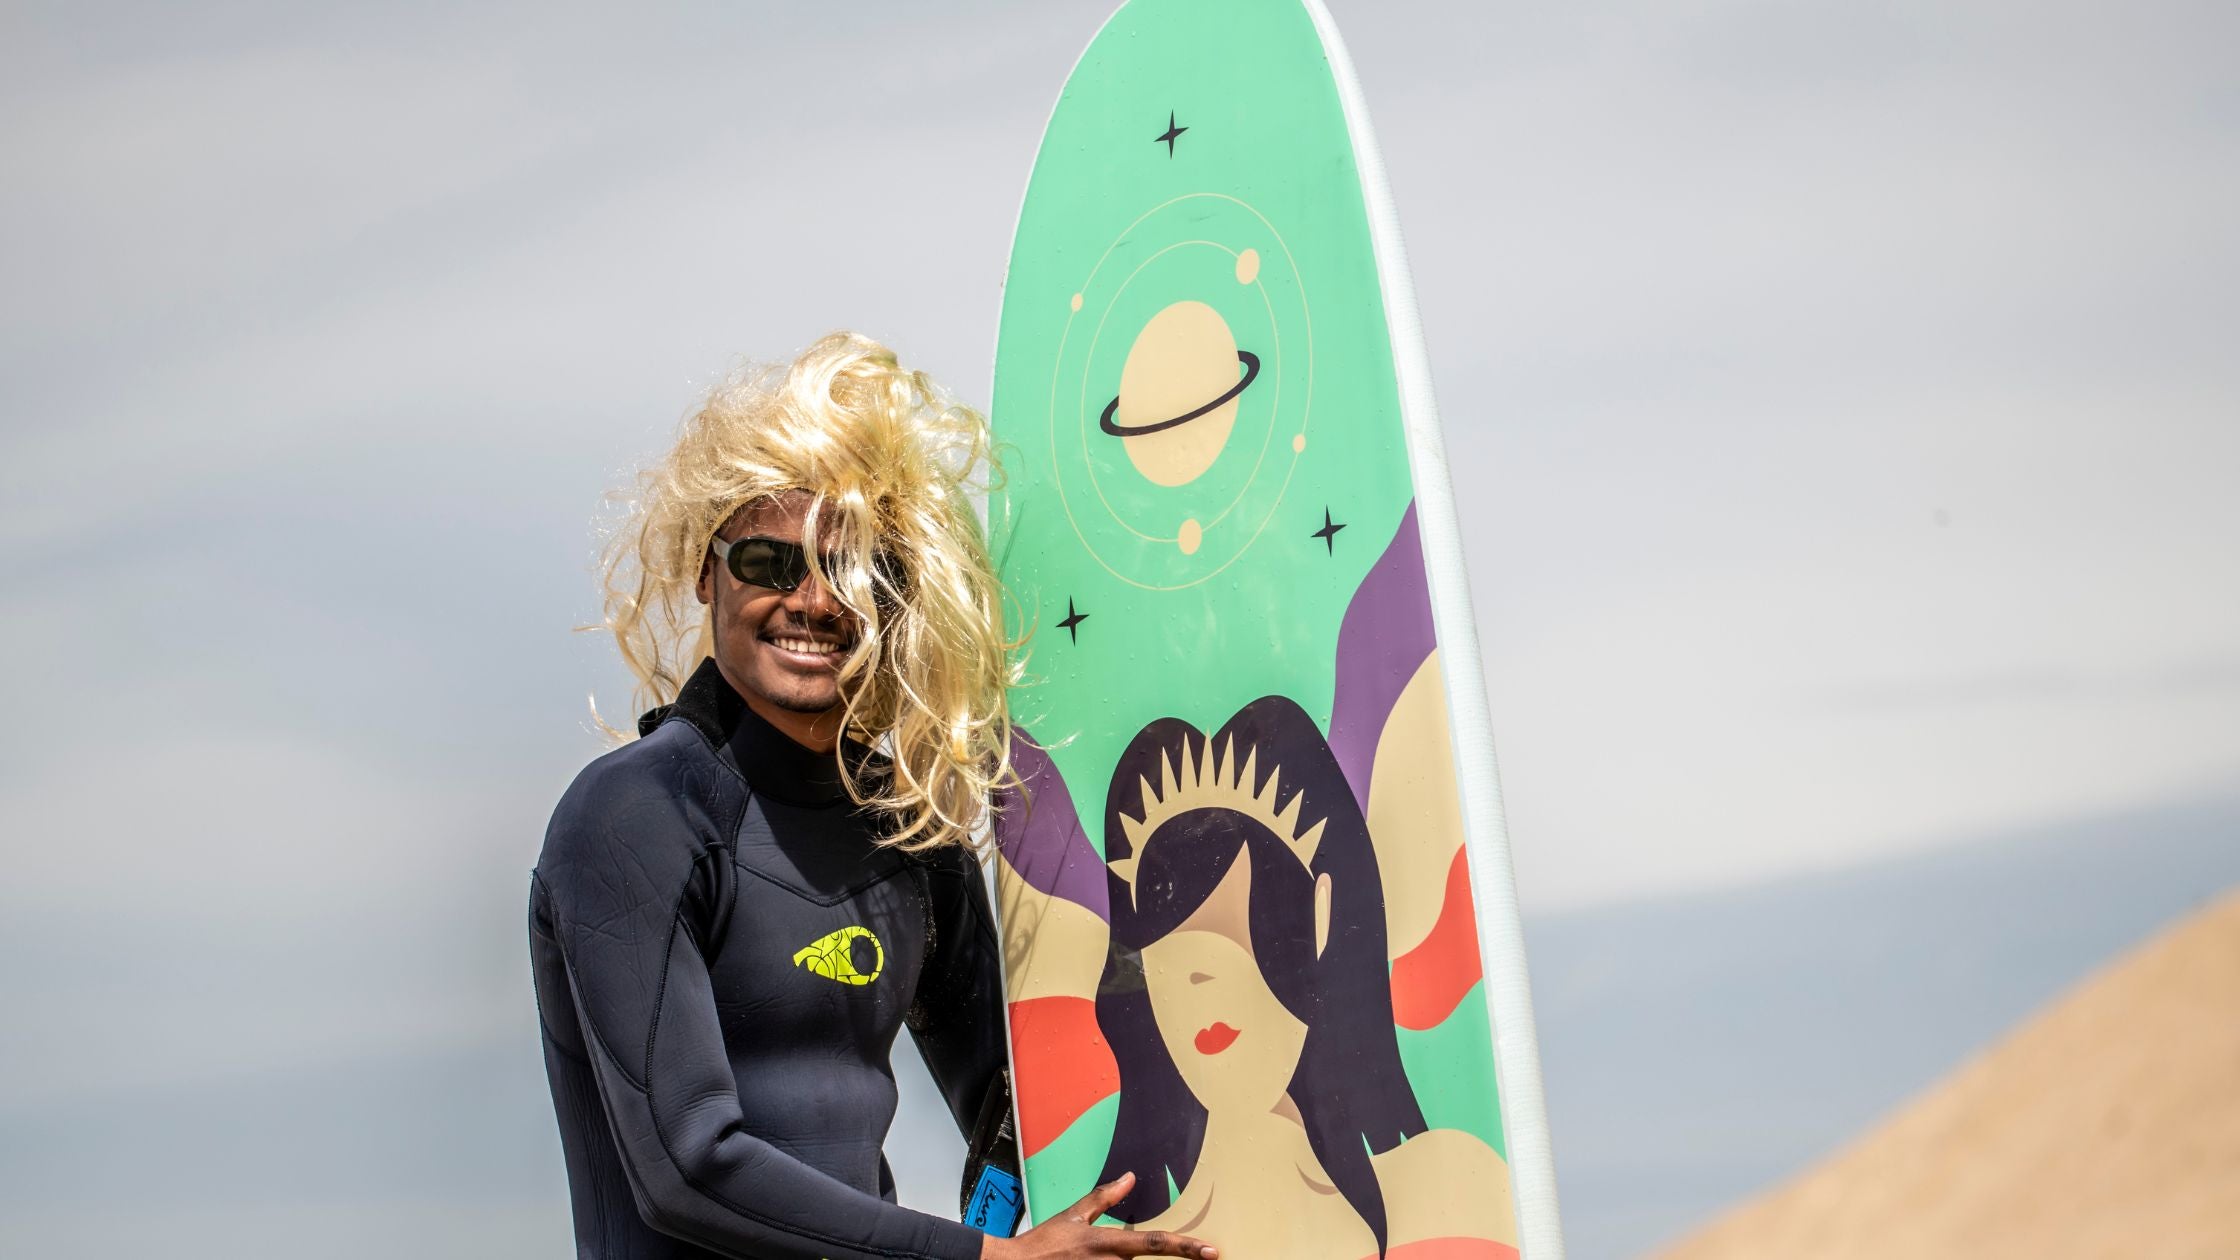 A happy surfer with a Zeus foam surfboard